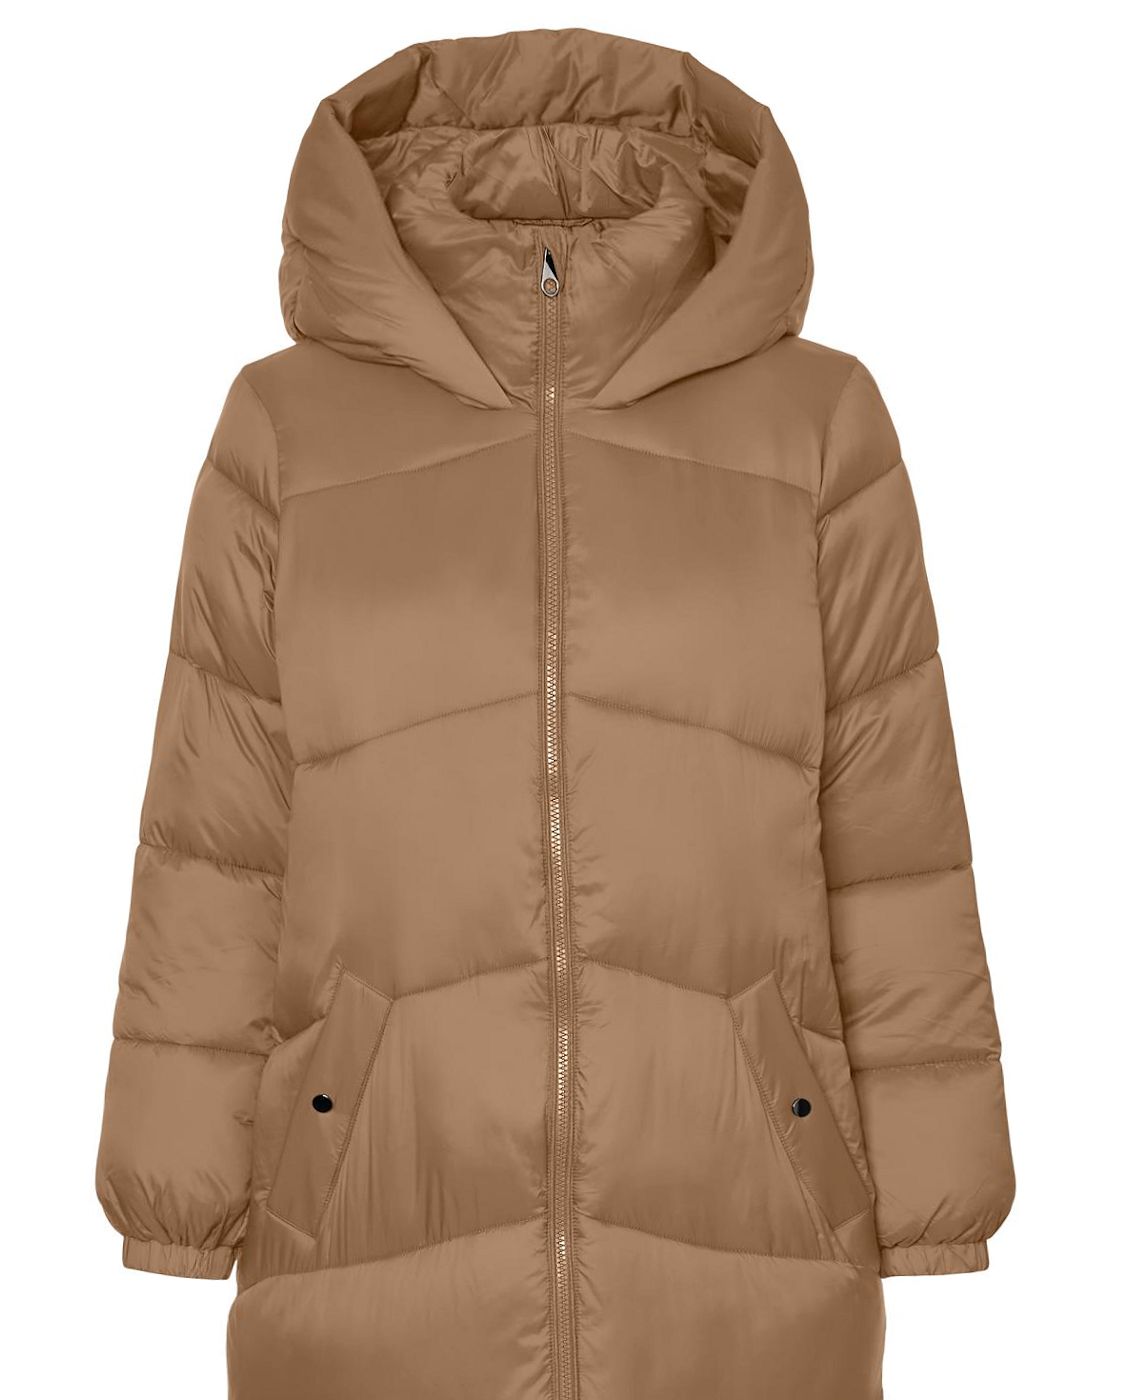 Vero Moda Damen Mantel Steppmantel Wintermantel Jacke Parka VMUppsala Long  Coat | eBay